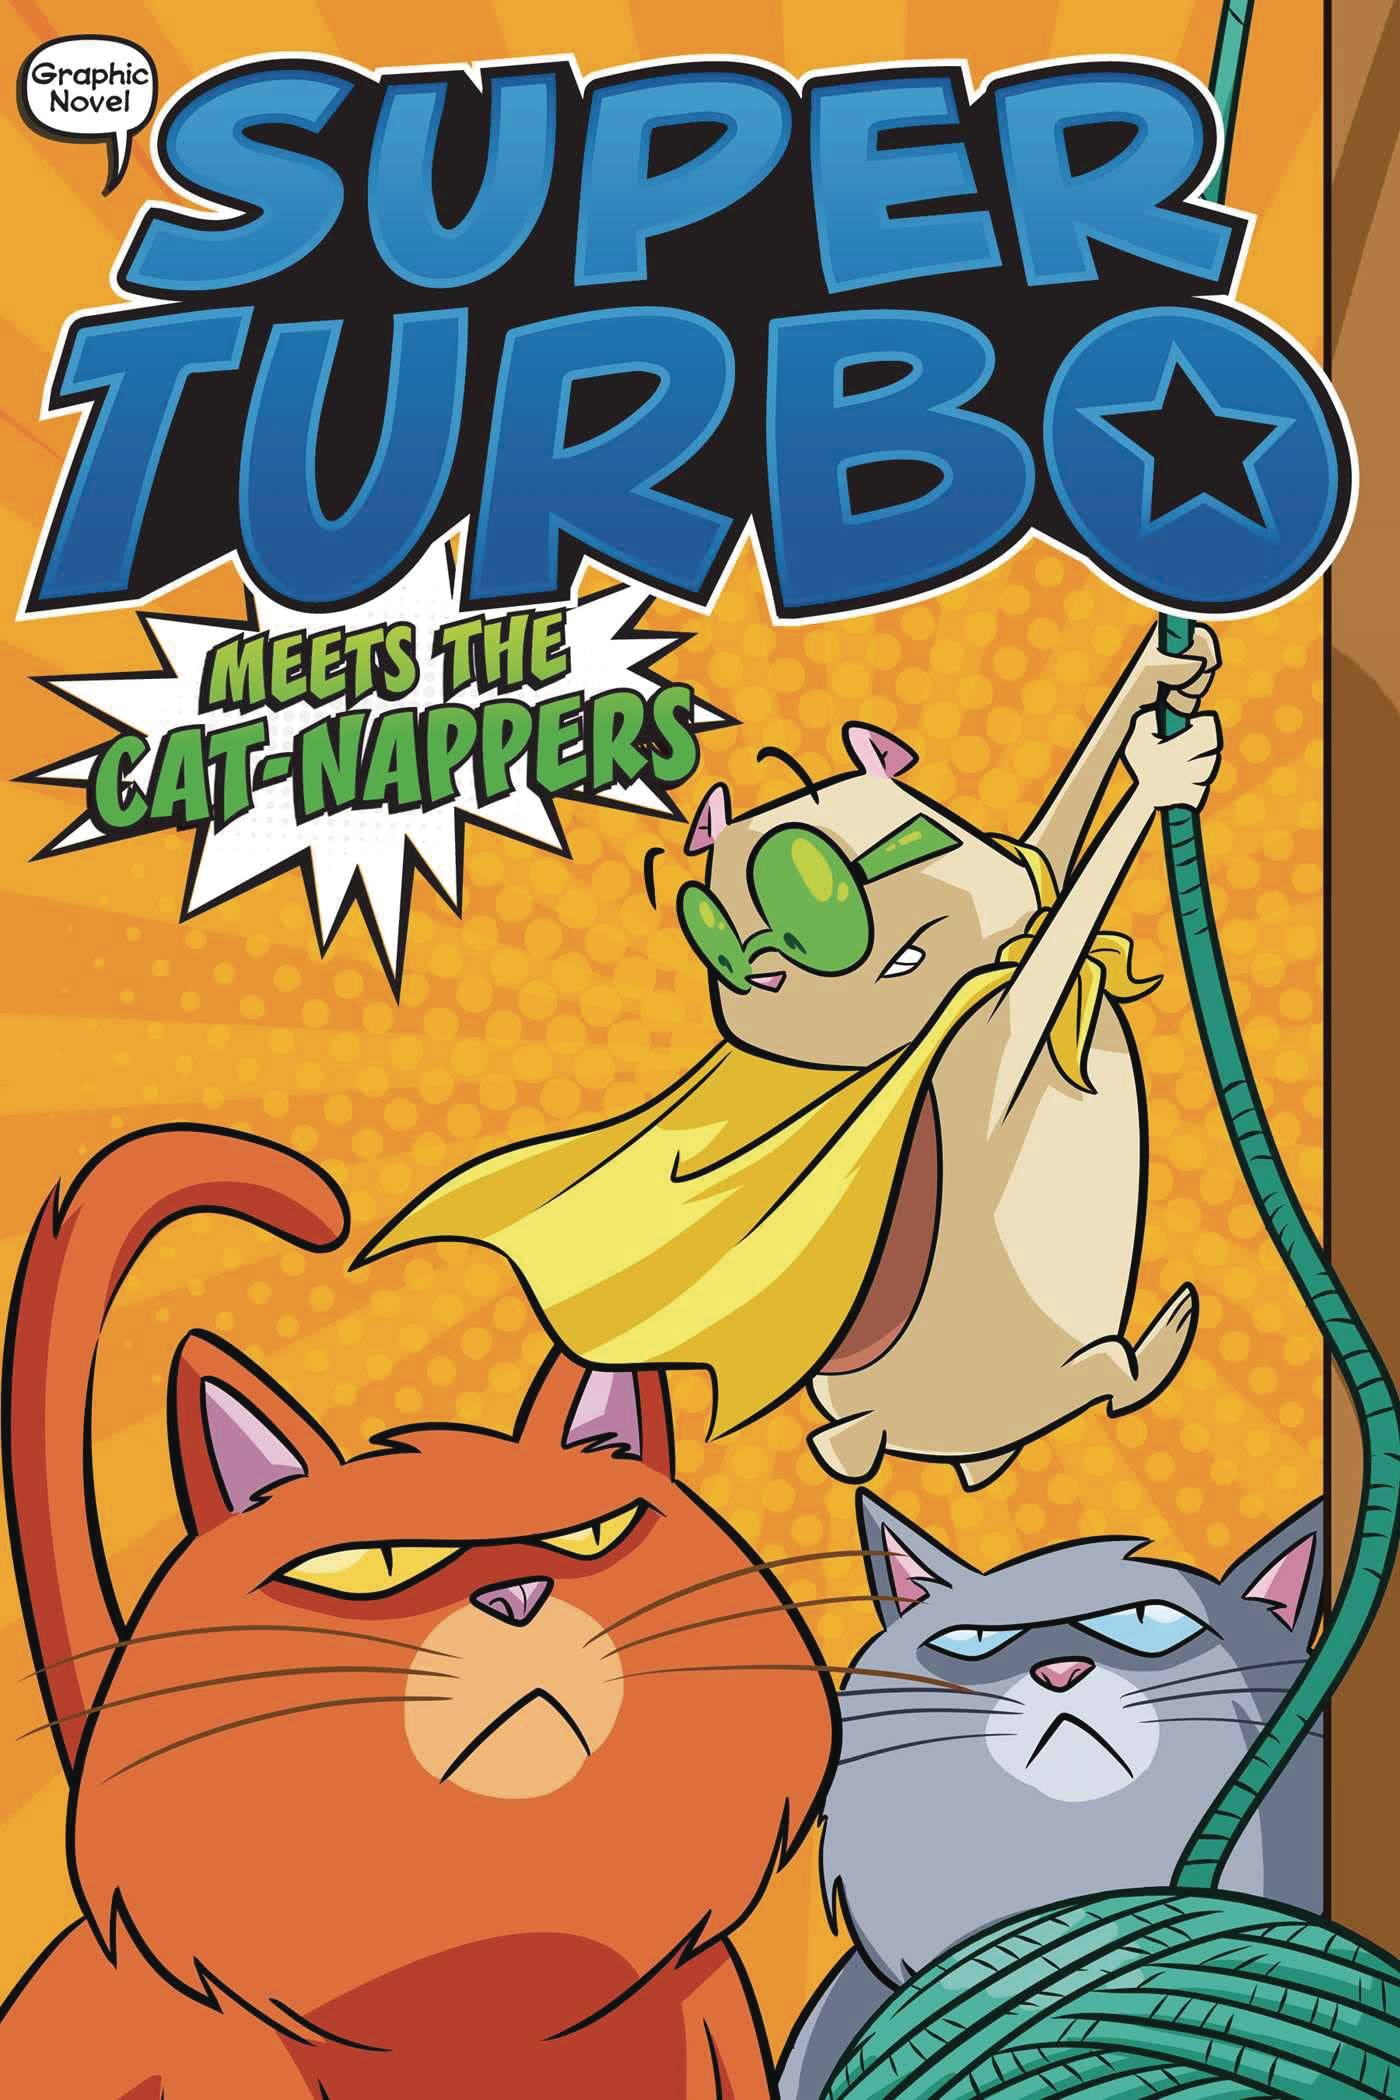 The One Stop Shop Comics & Games Super Turbo Gn Vol 07 Meets The Cat-Nappers (C: 0-1-0) (08/24/2022) LITTLE SIMON